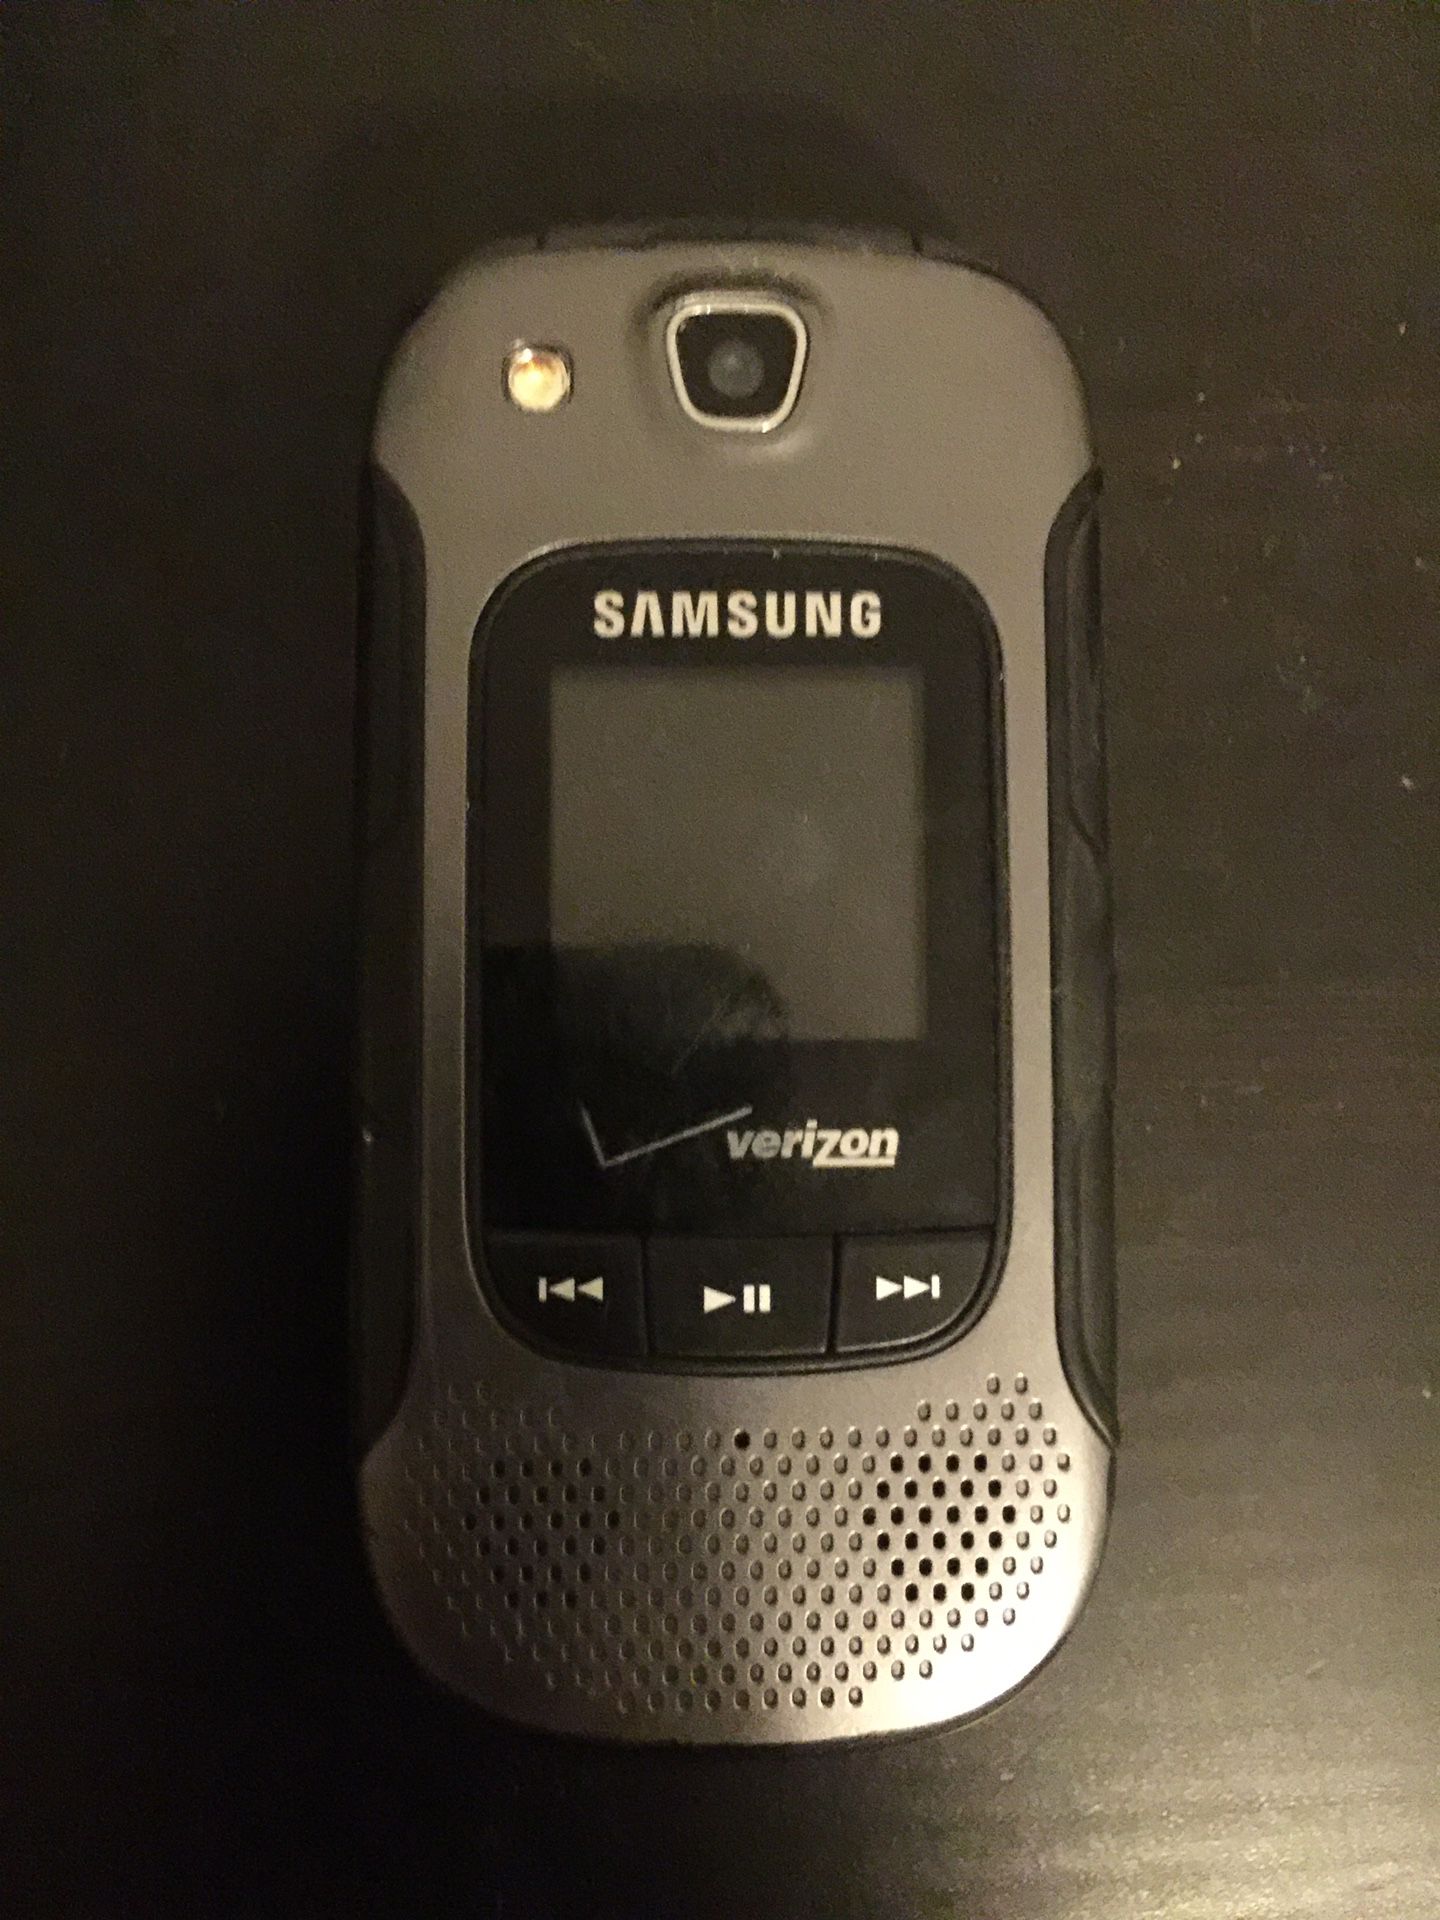 samsung verizon slide phone